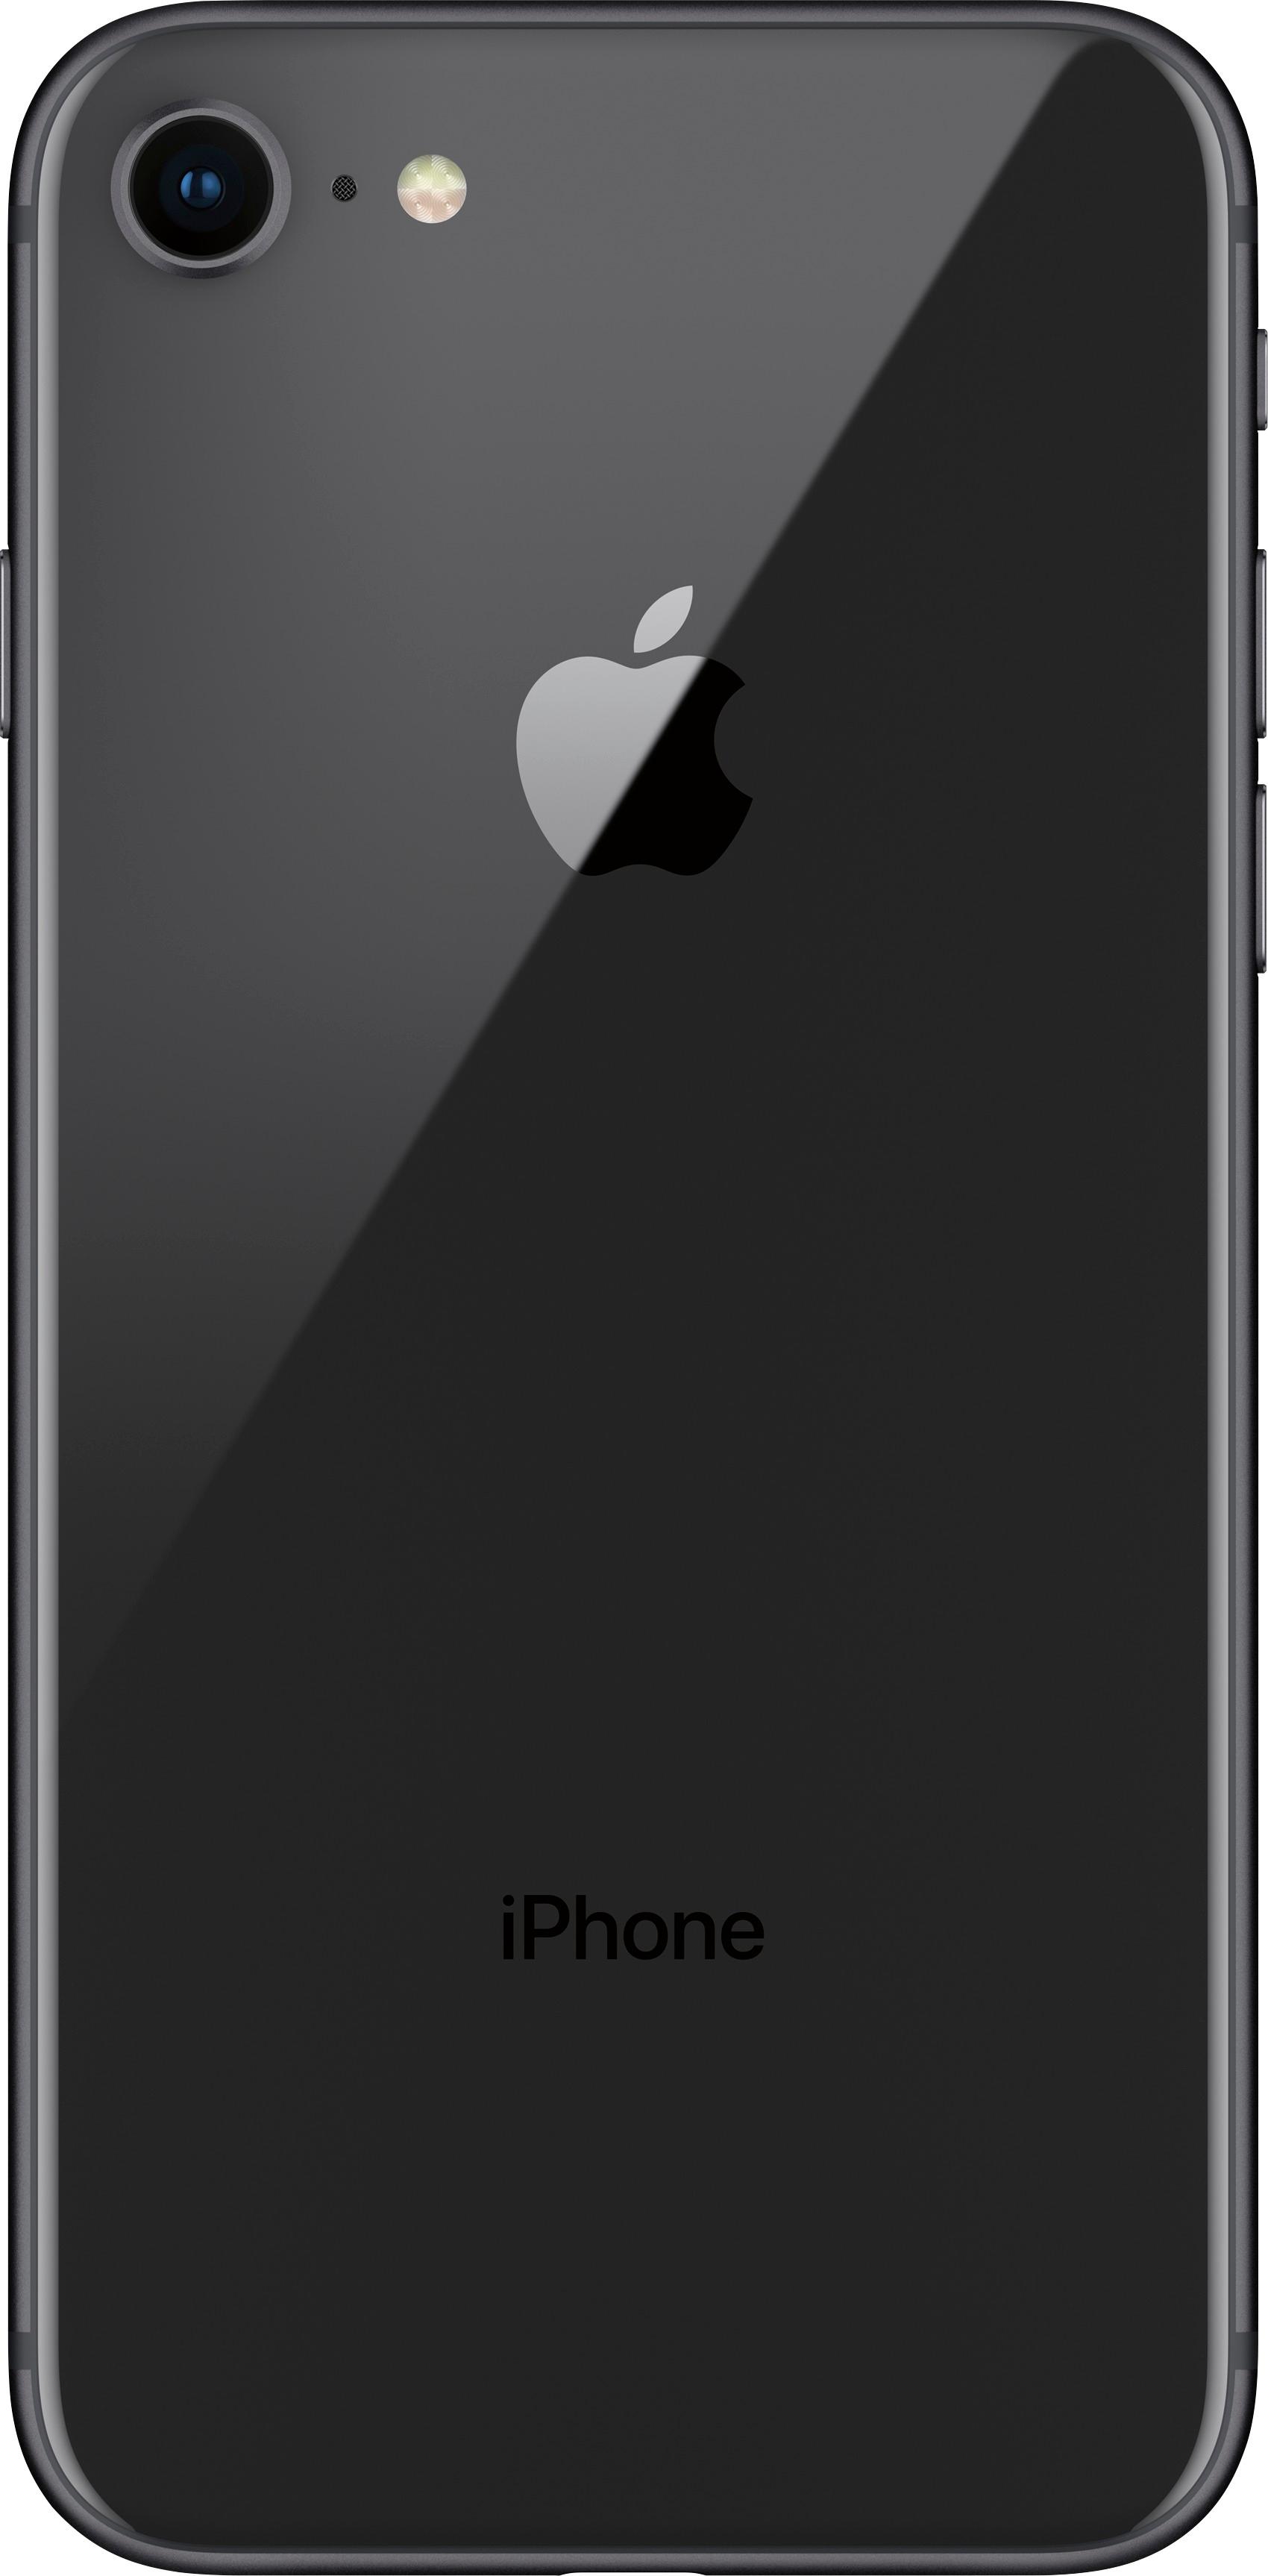 Best Buy: Apple iPhone 8 64GB Space Gray (Verizon) MQ6K2LL/A